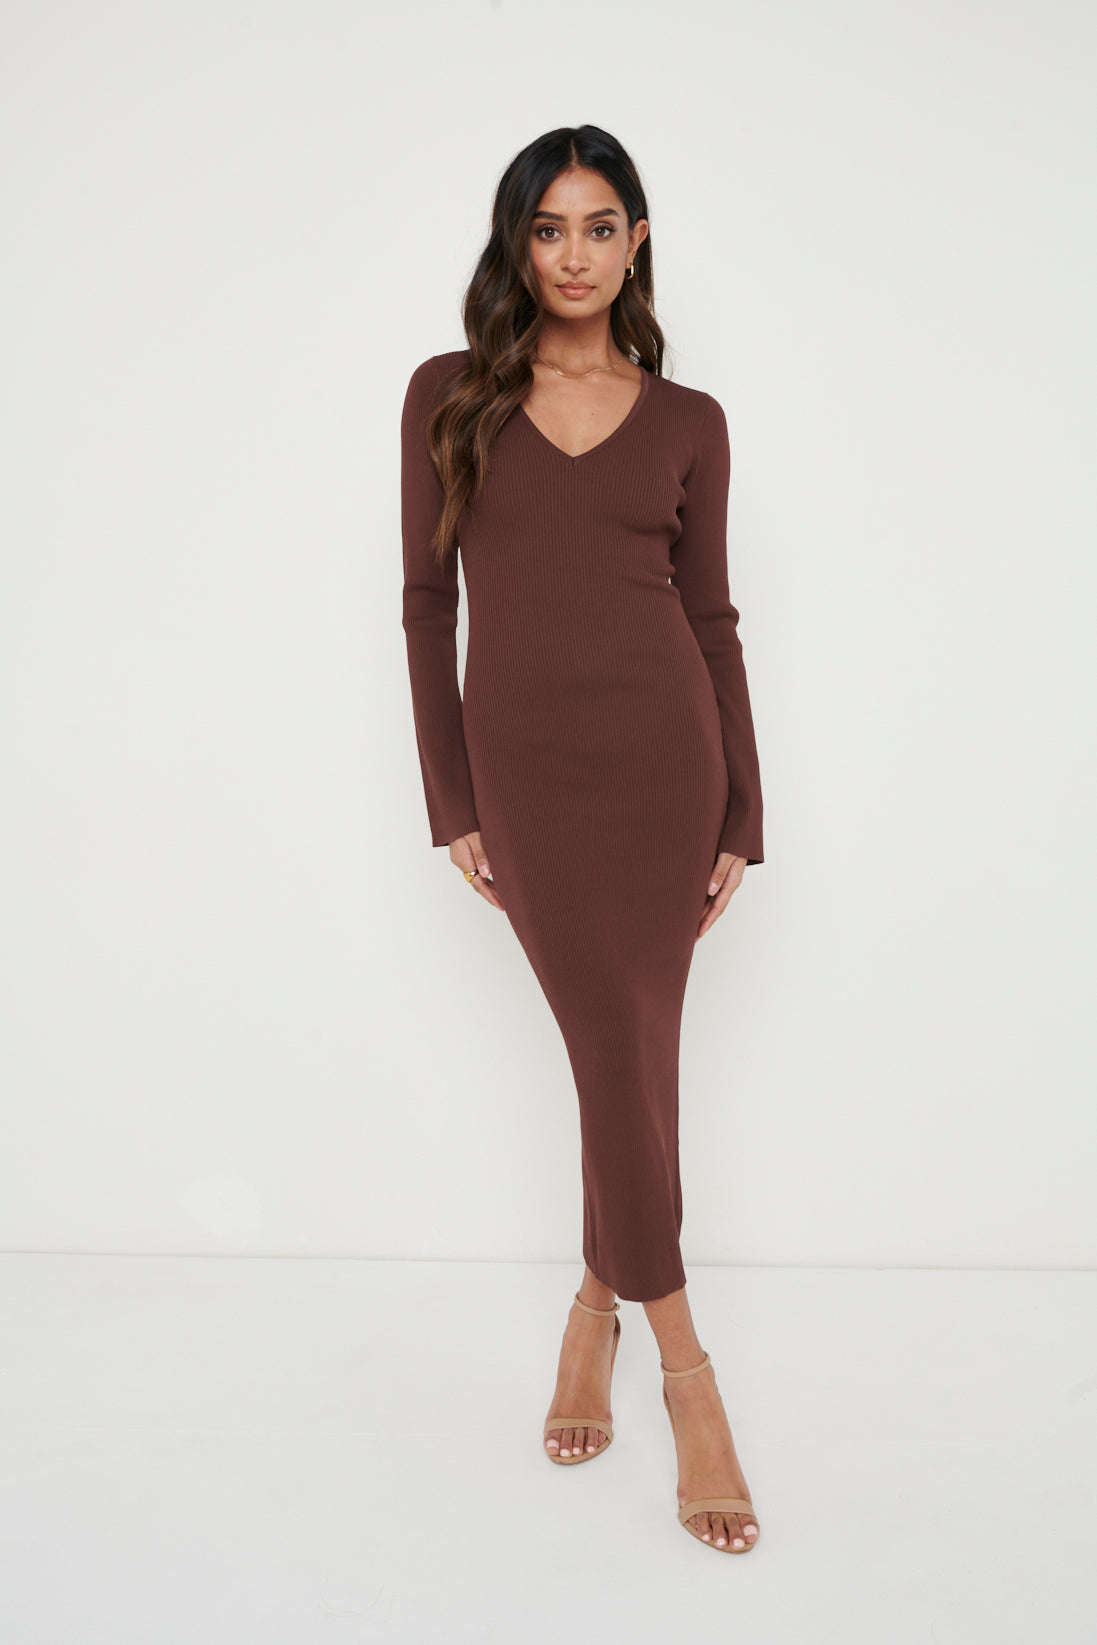 Lara Long Sleeve Dress- Brown, XL